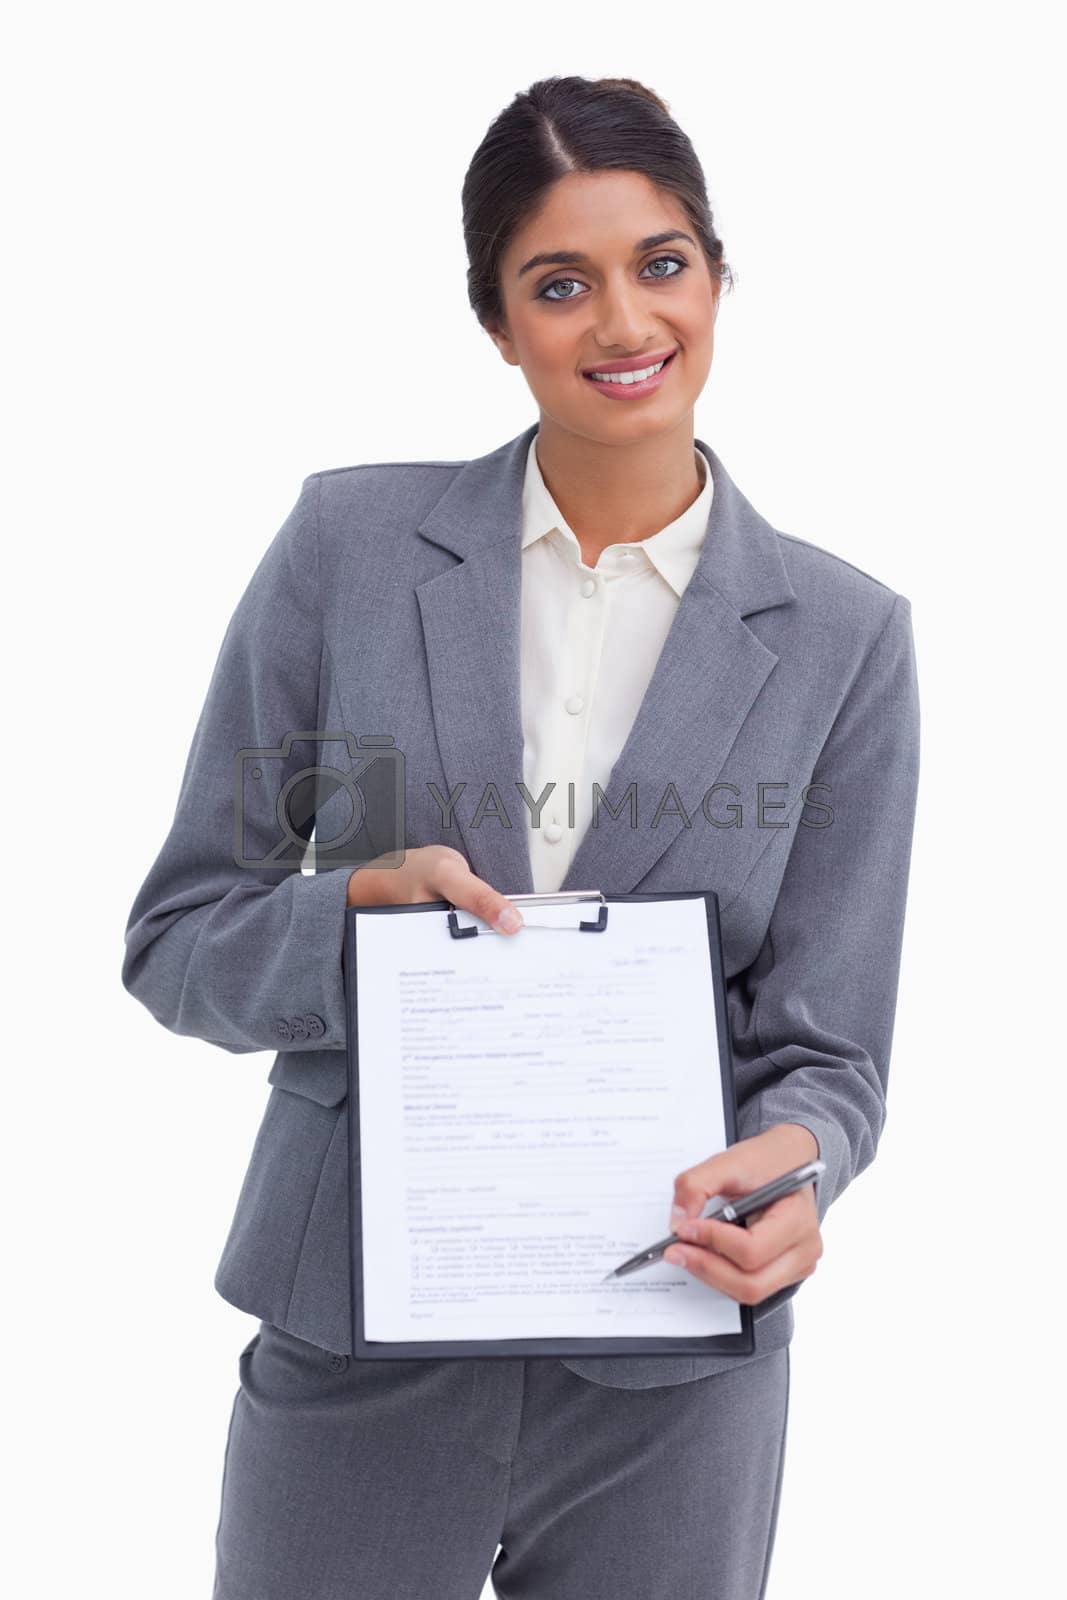 Royalty free image of Smiling female entrepreneur asking for signature by Wavebreakmedia